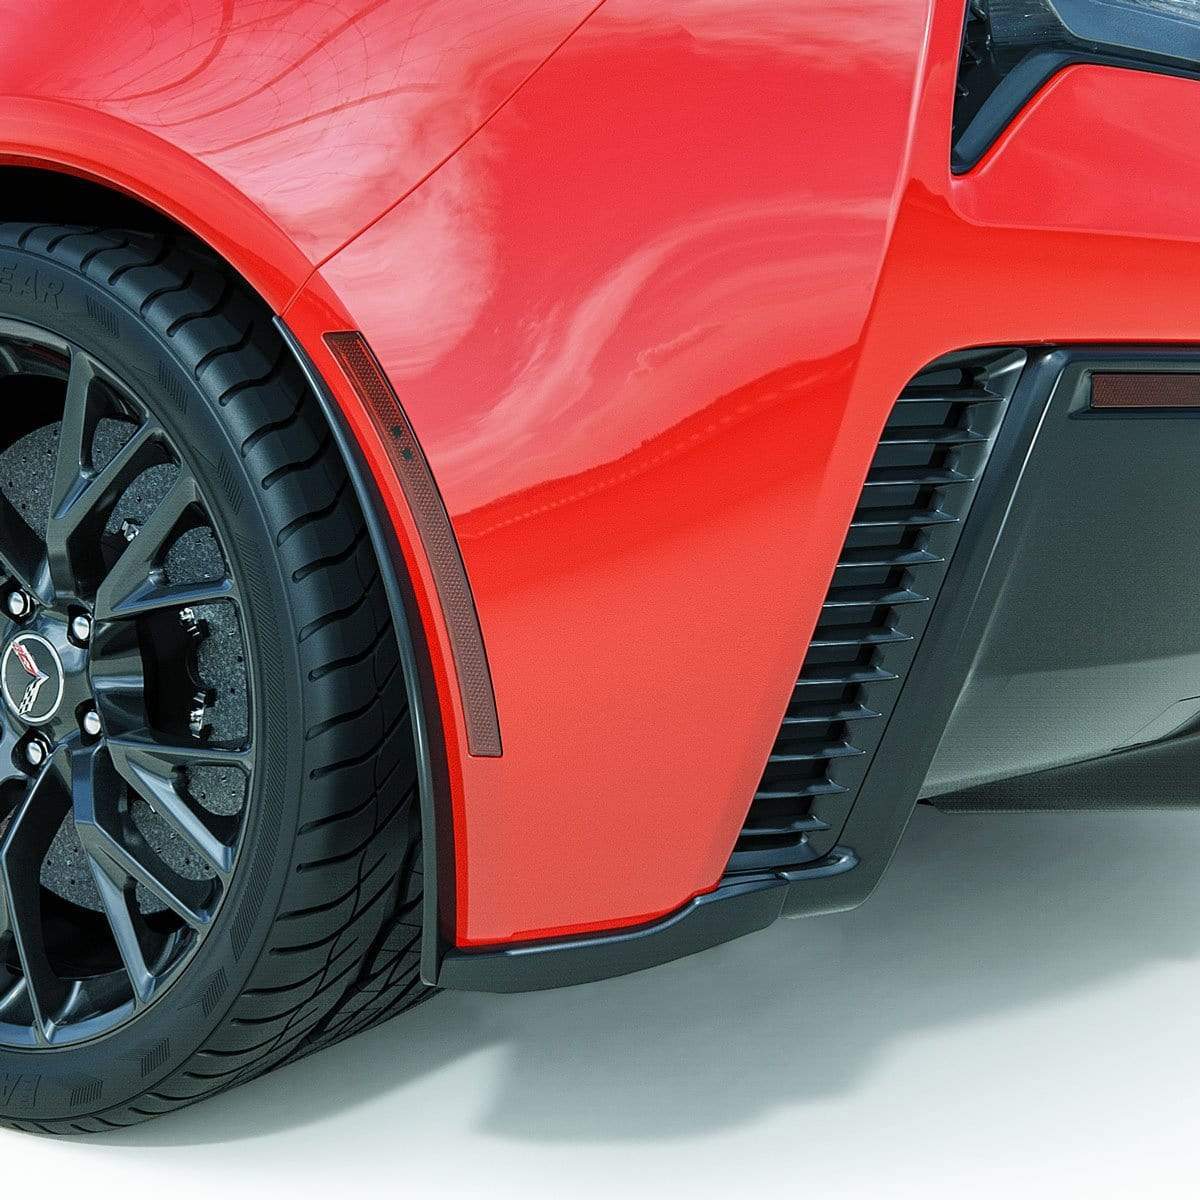 ACS Composite C7 Rear Fascia Extensions in Carbon Flash Metallic Black for ZR1, Z06, Grand Sport & Stingray Corvette (SKU: 45-4-183 CFZ) - Protects and enhances the rear fascia.